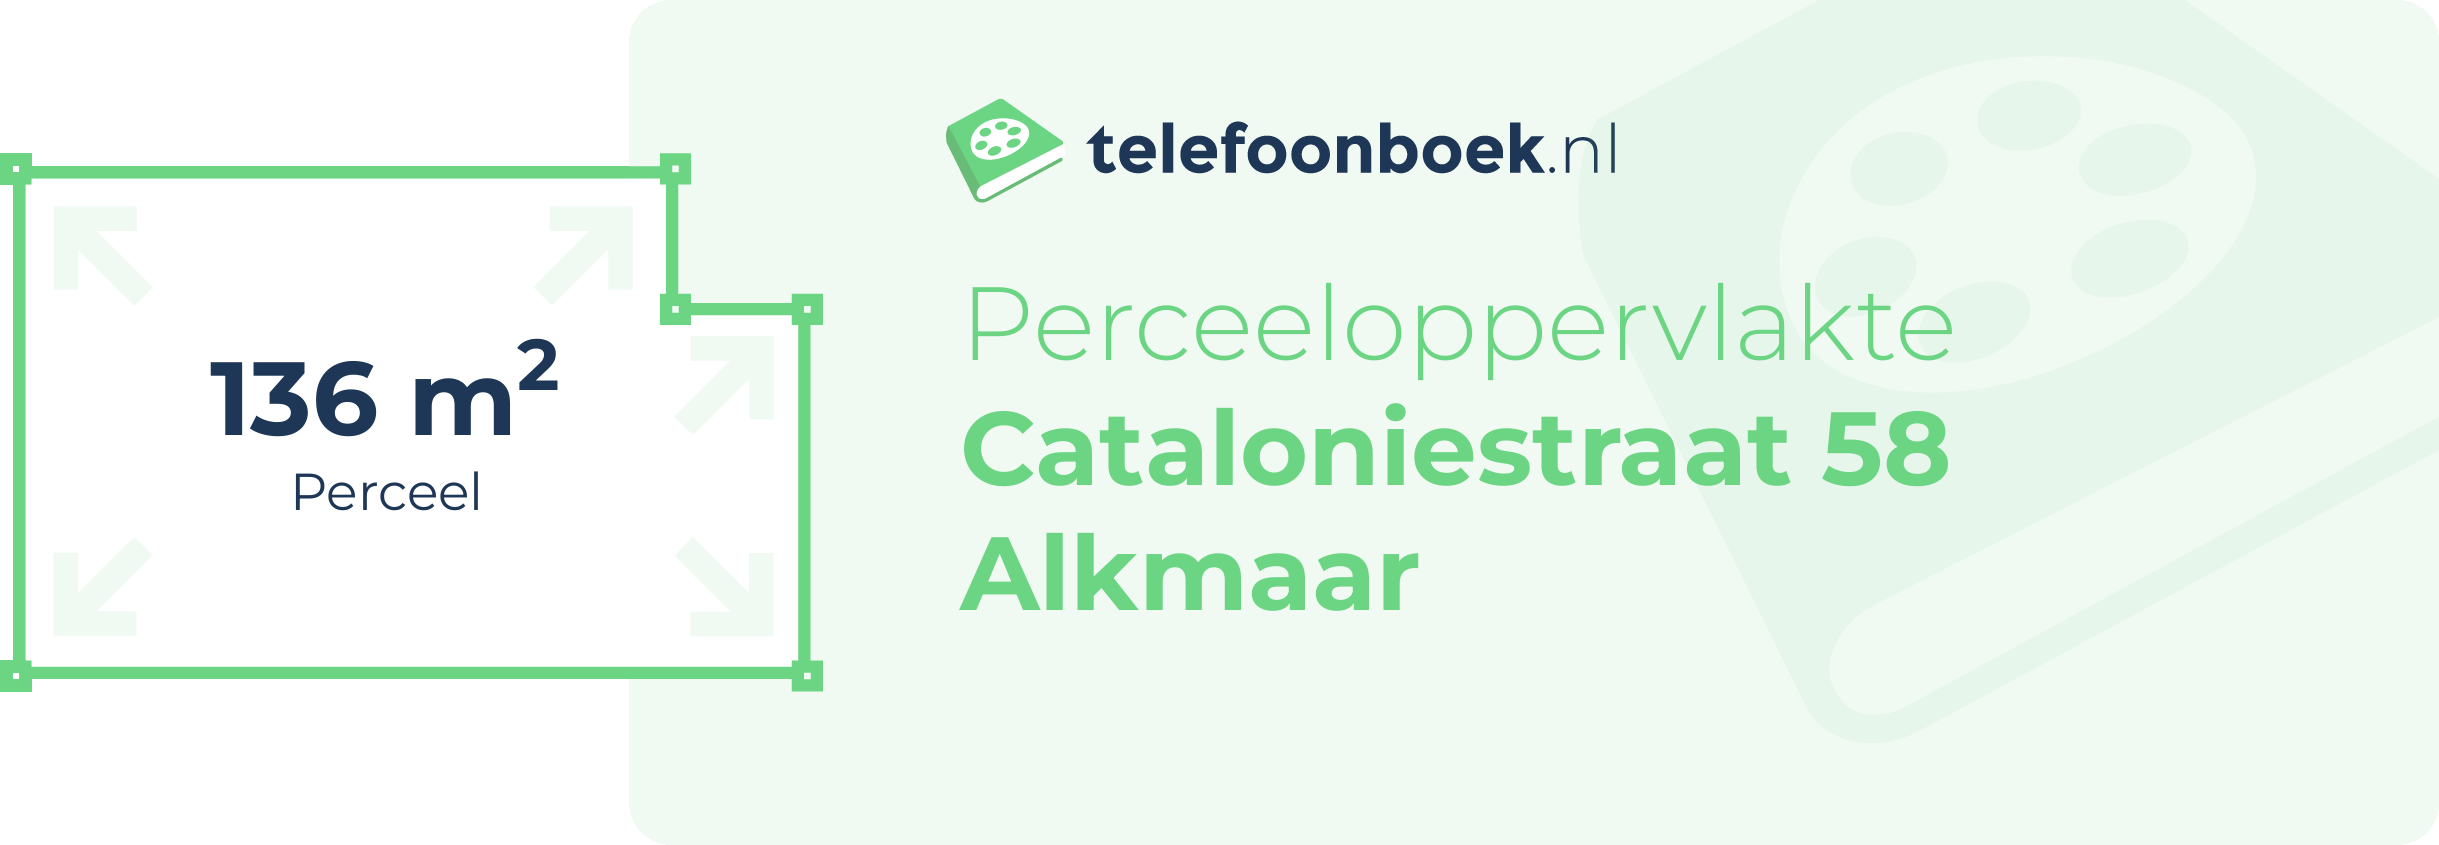 Perceeloppervlakte Cataloniestraat 58 Alkmaar